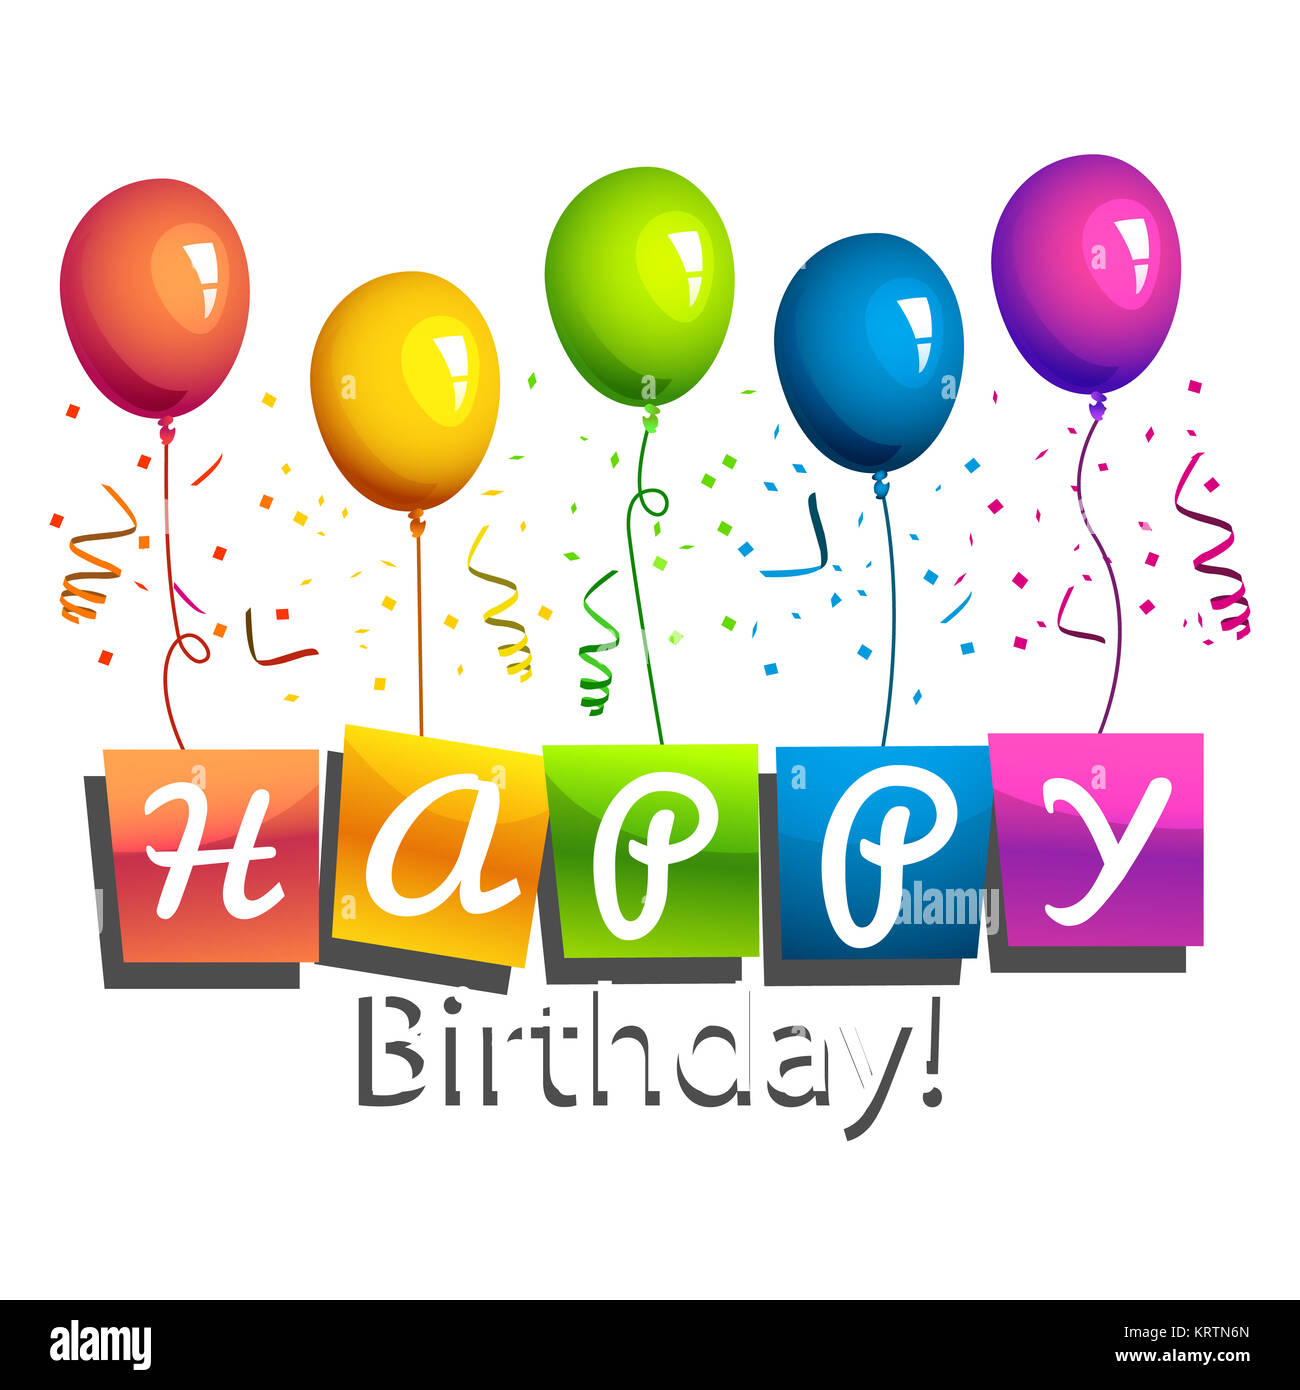 Colorful Happy Birthday Greeting Card Stock Photo - Alamy